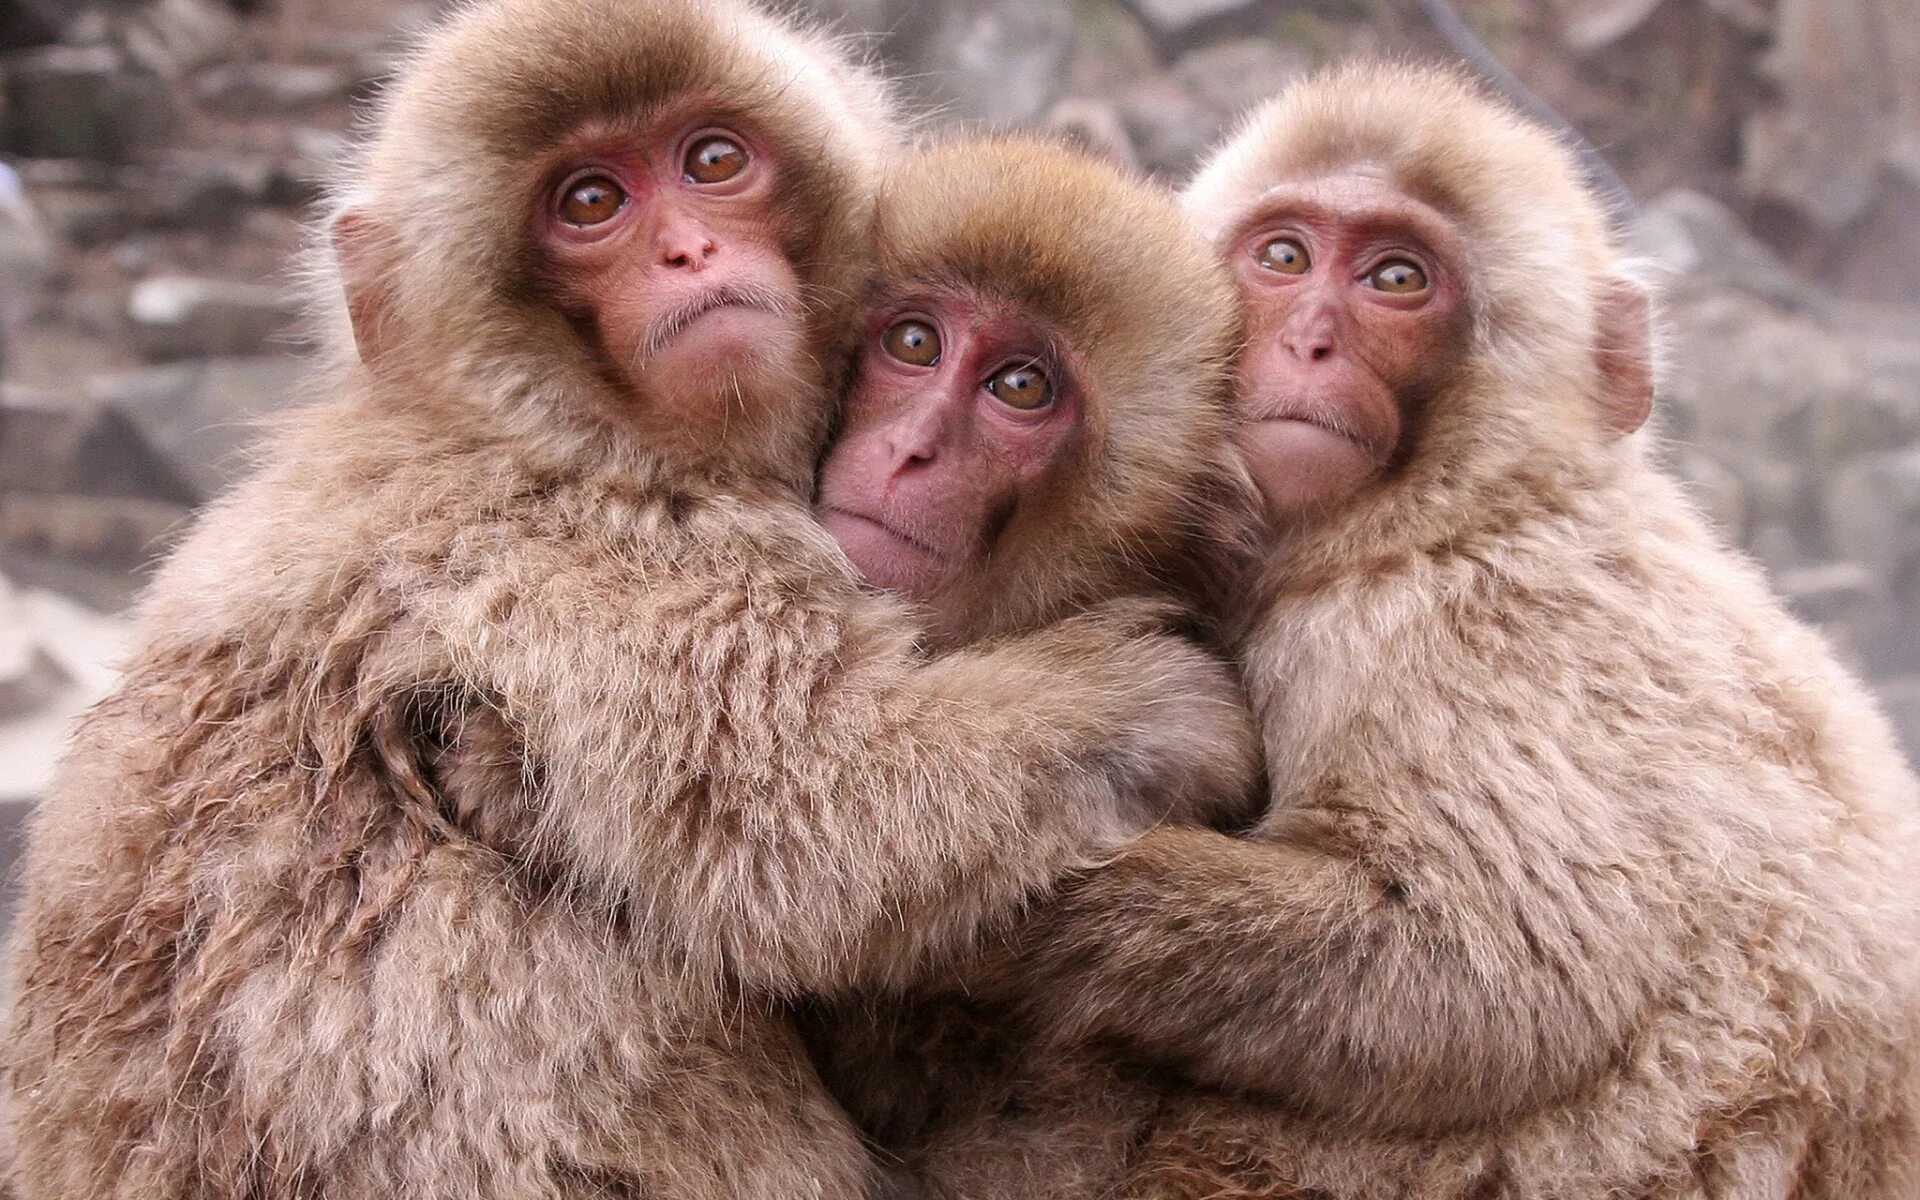 Monkey wallpapers. Обезьяны. Три обезьянки. Забавные обезьяны. Три смешные обезьяны.